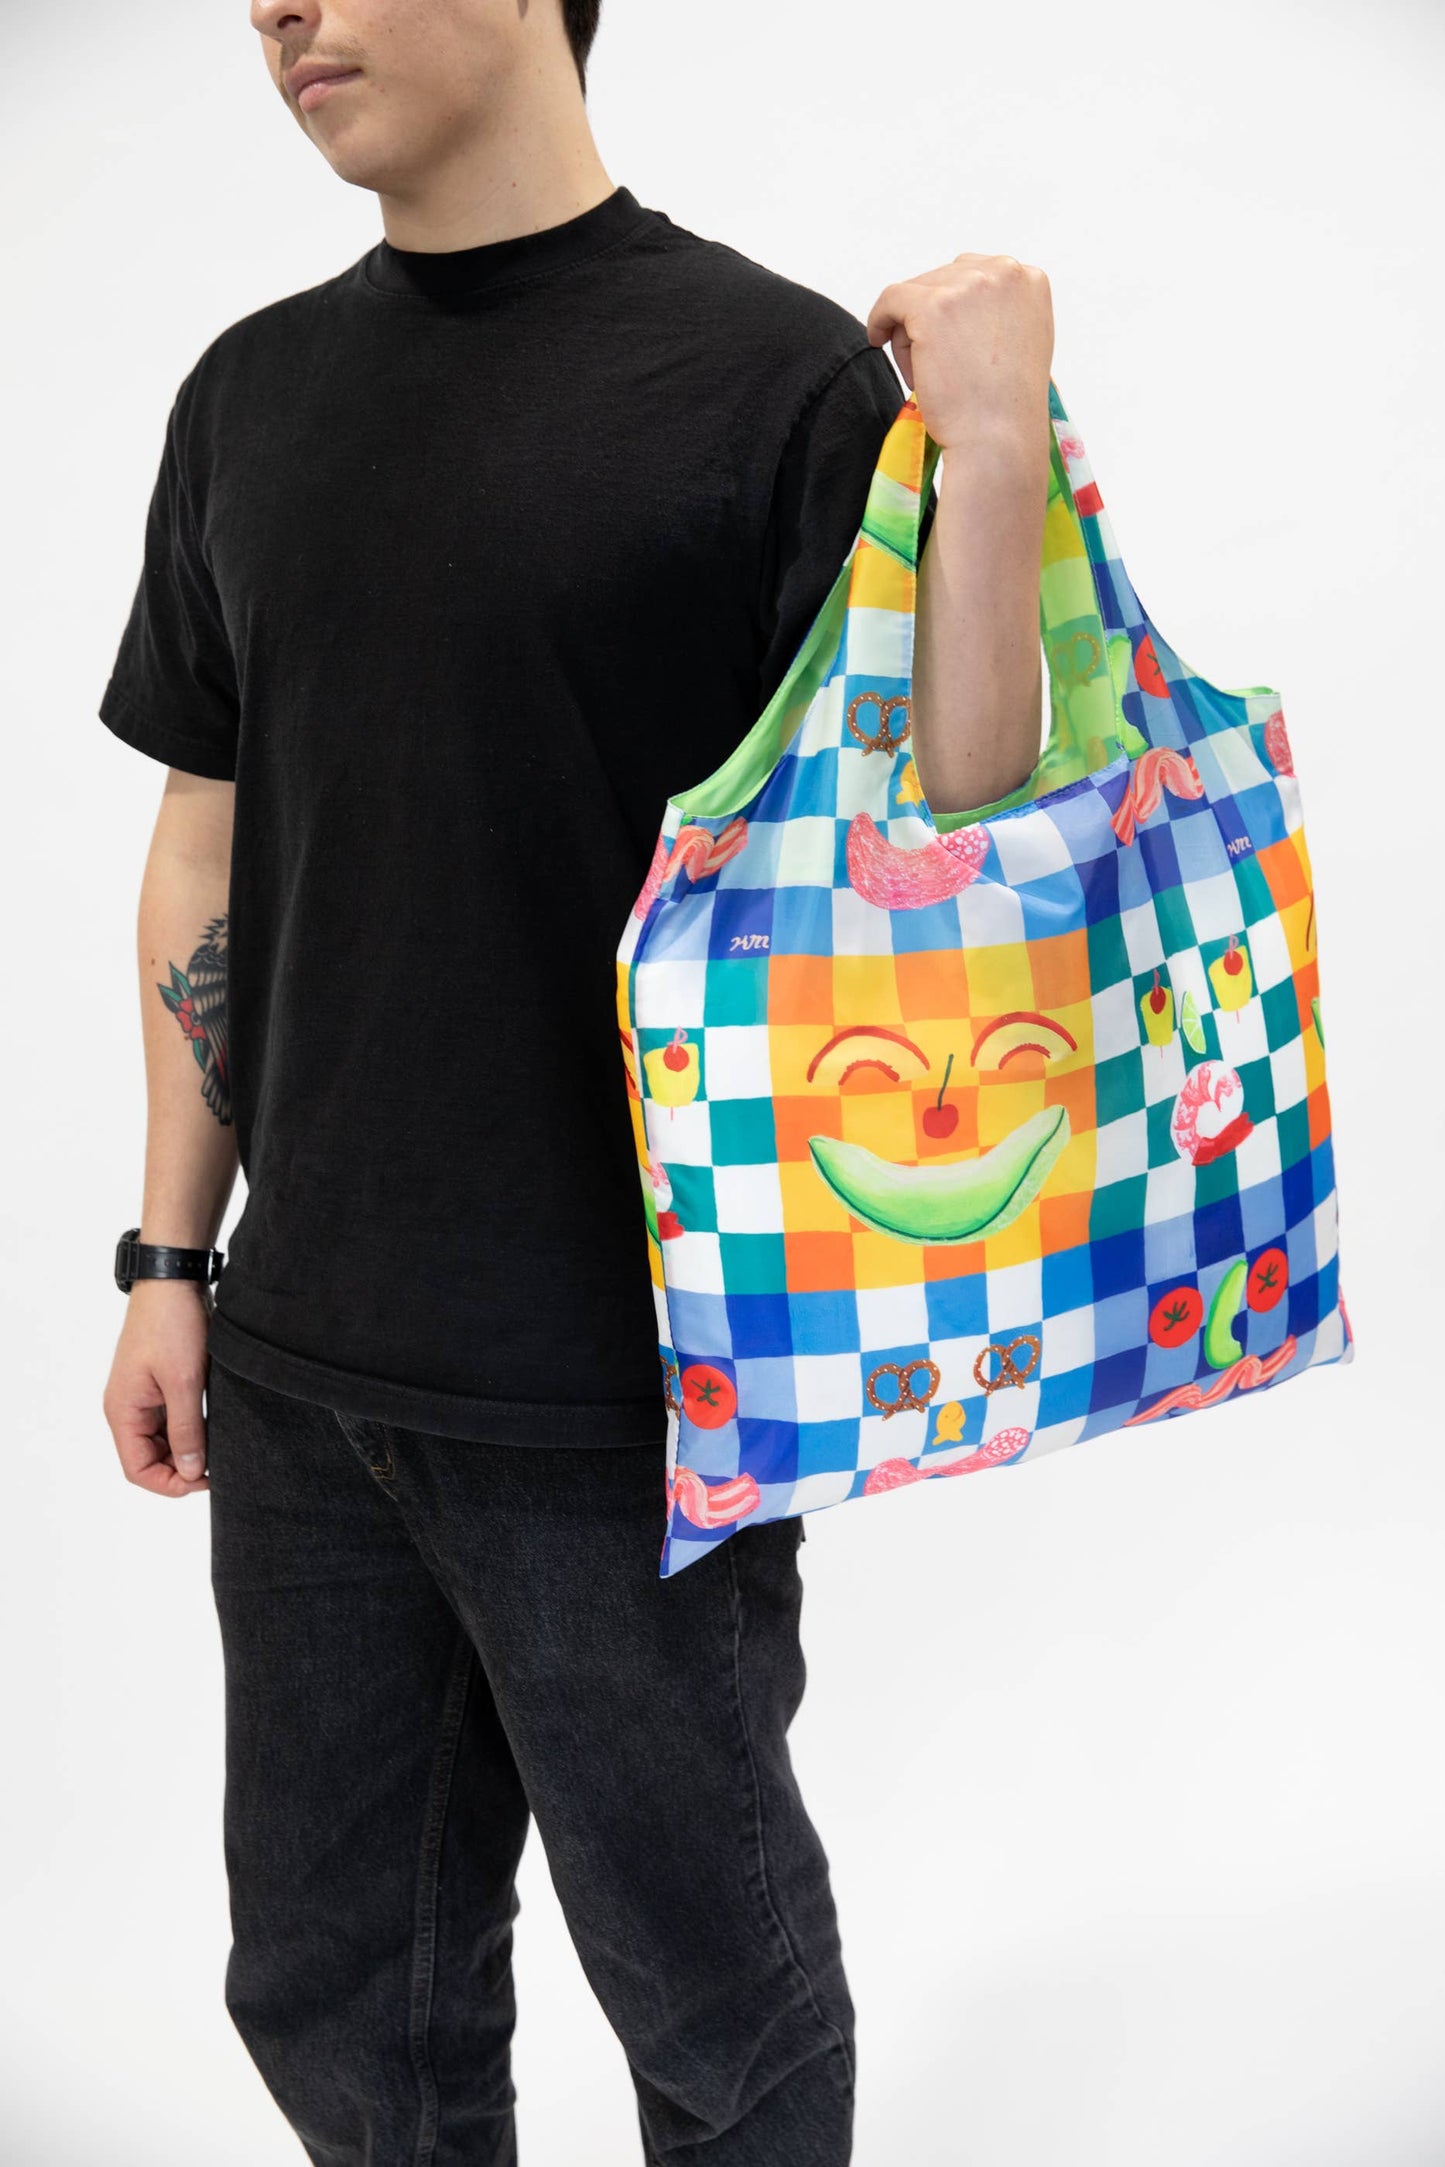 Picnic Art Sack by Kristina Micotti - Reusable Tote Bag